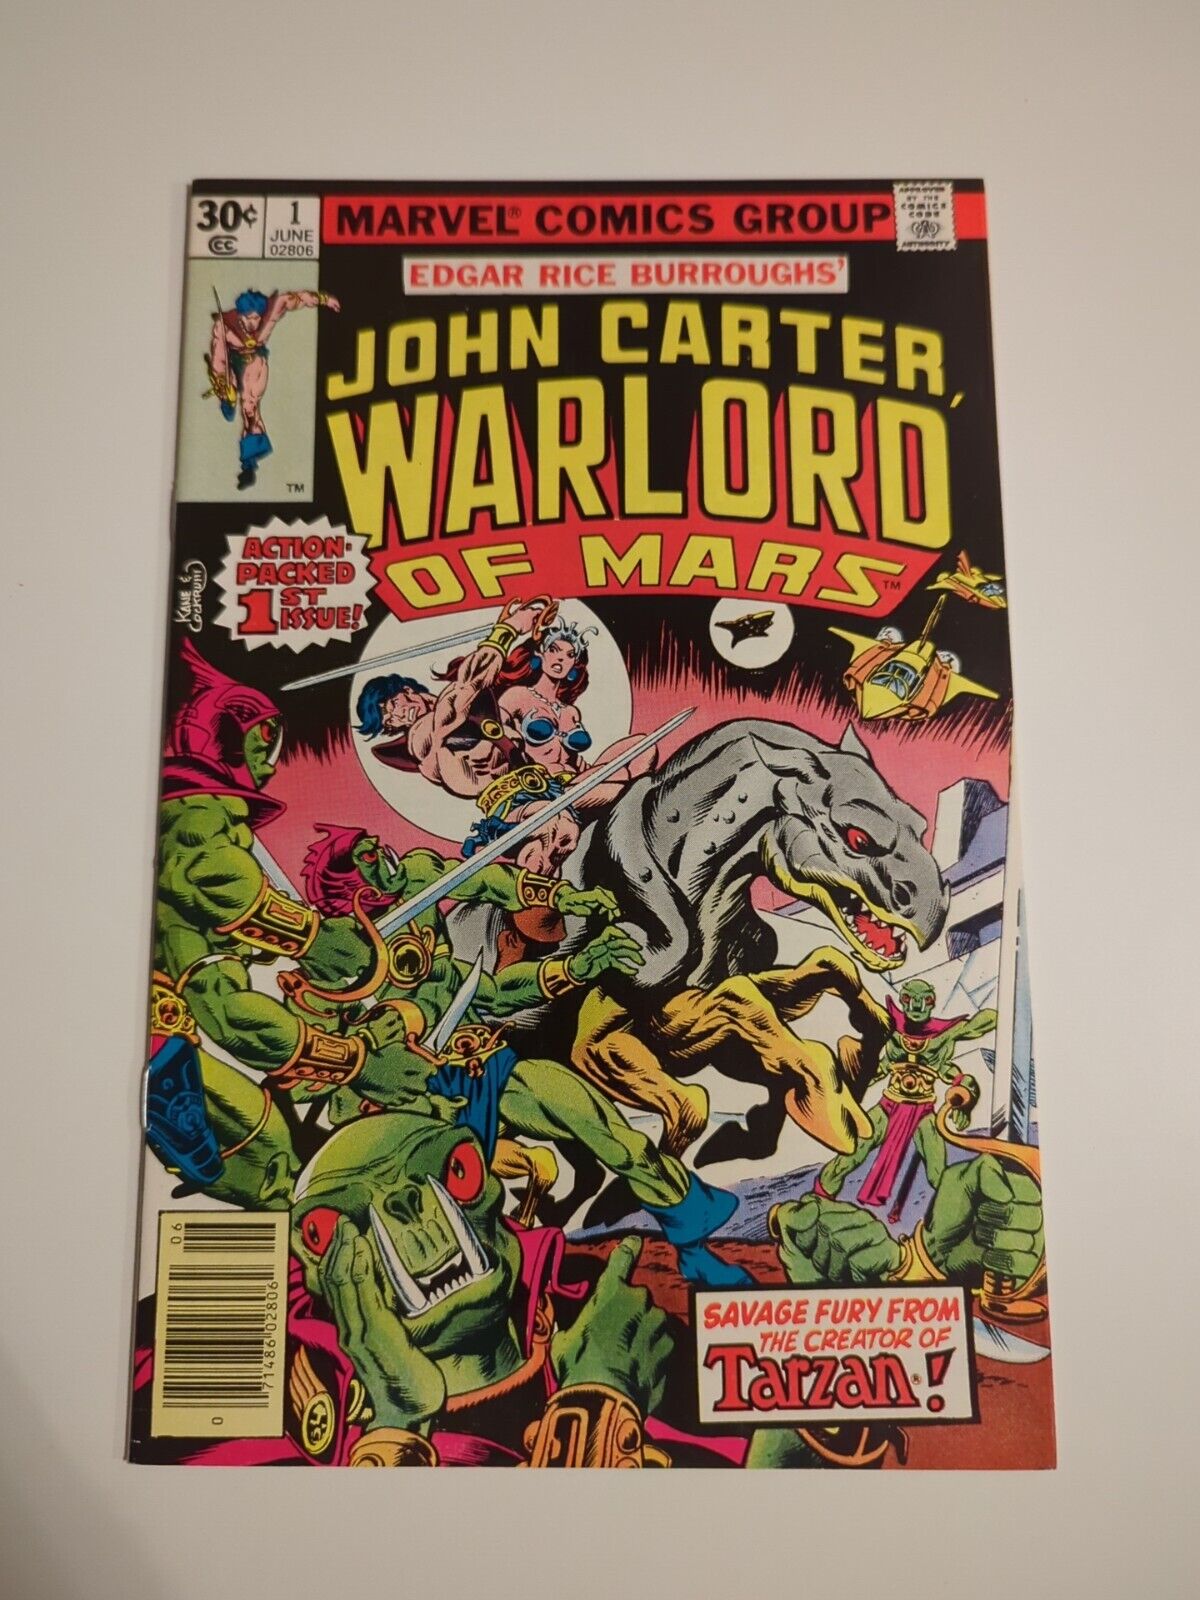 John Carter, Warlord of Mars #1 Marvel Comics 1977 HIGH GRADE